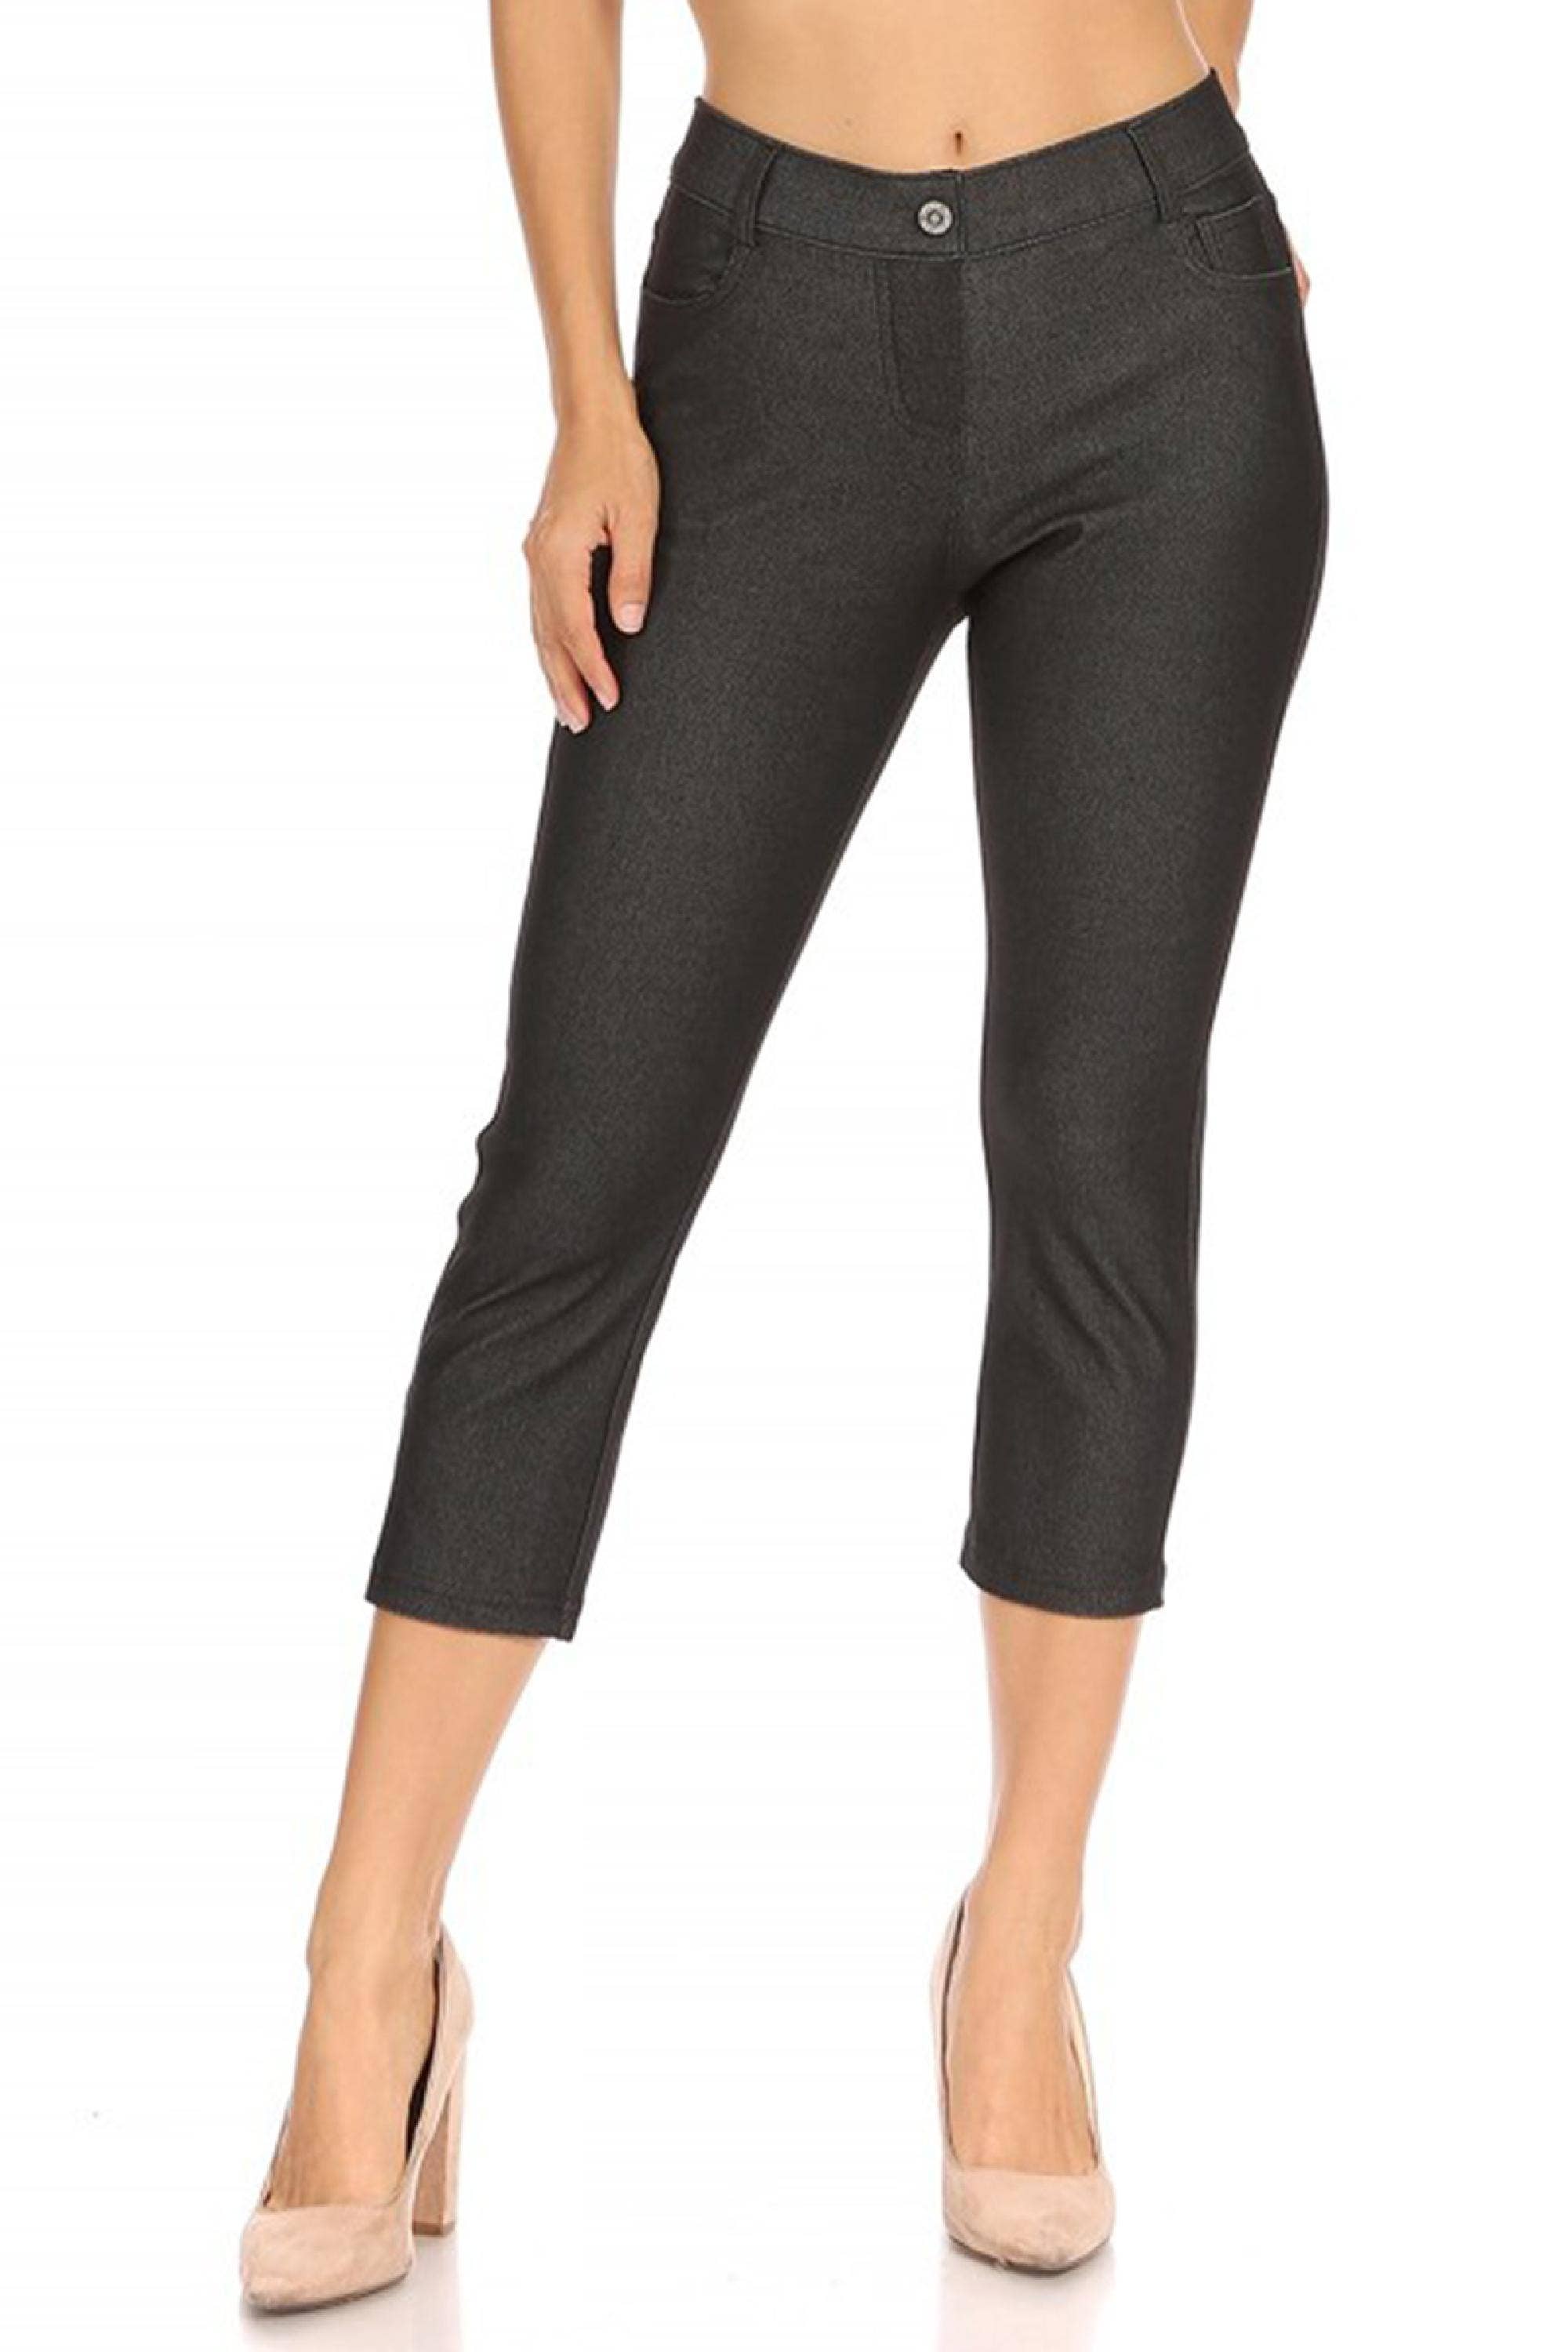 BZB Women's Jean Capris Denim Capris Pull On Capri Jeans Knee Length Jeans  with Pocket at Amazon Women's Jeans store